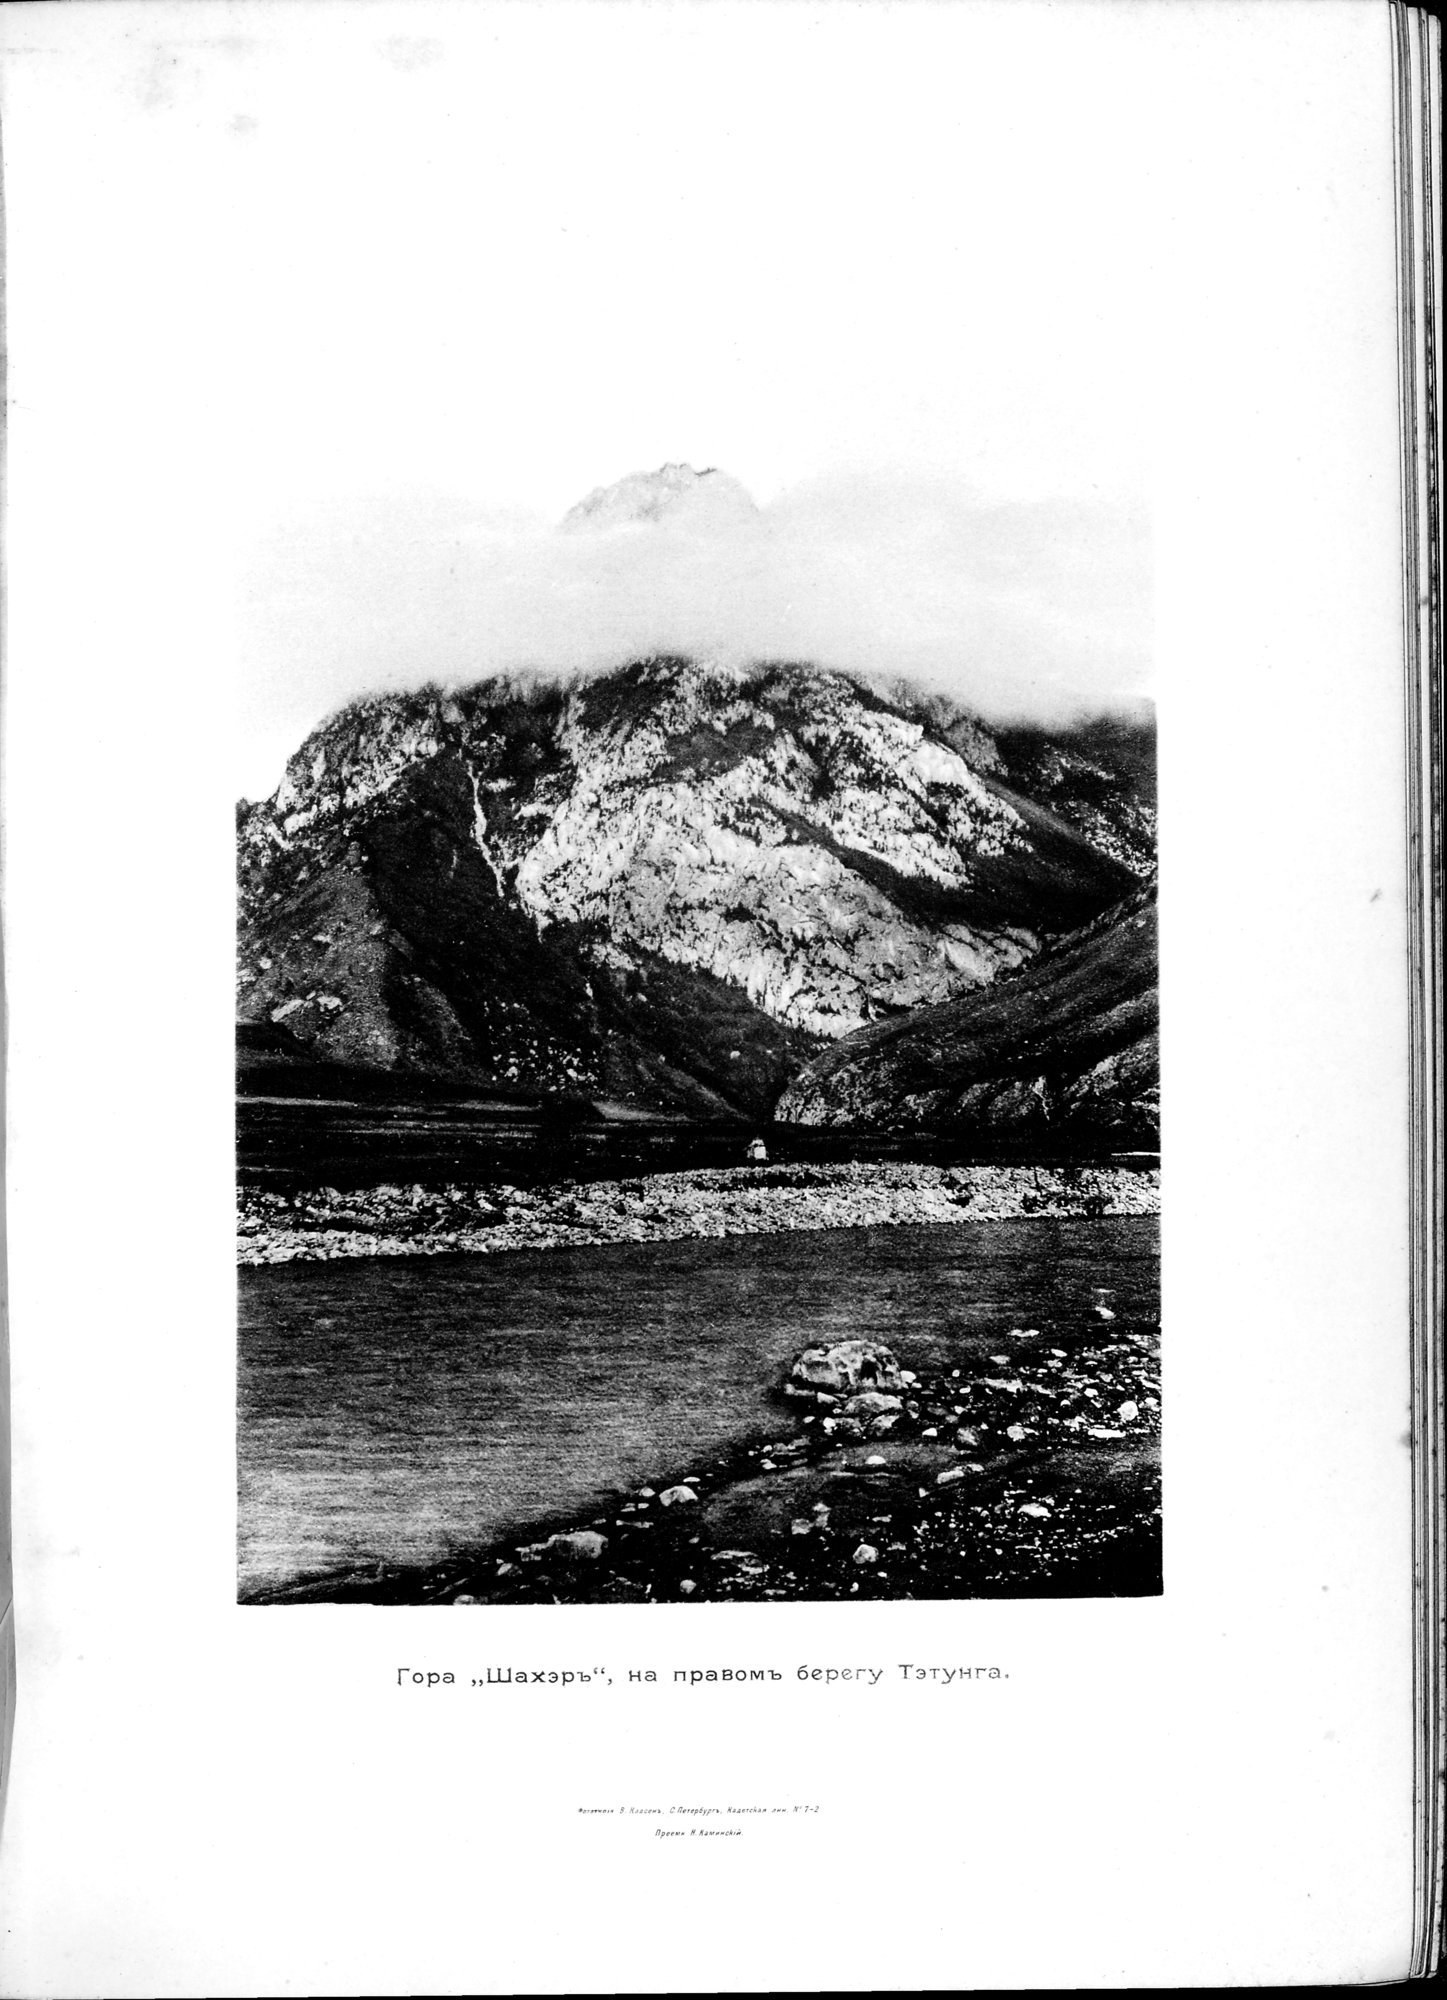 Mongoliia i Kam : vol.1 / Page 195 (Grayscale High Resolution Image)